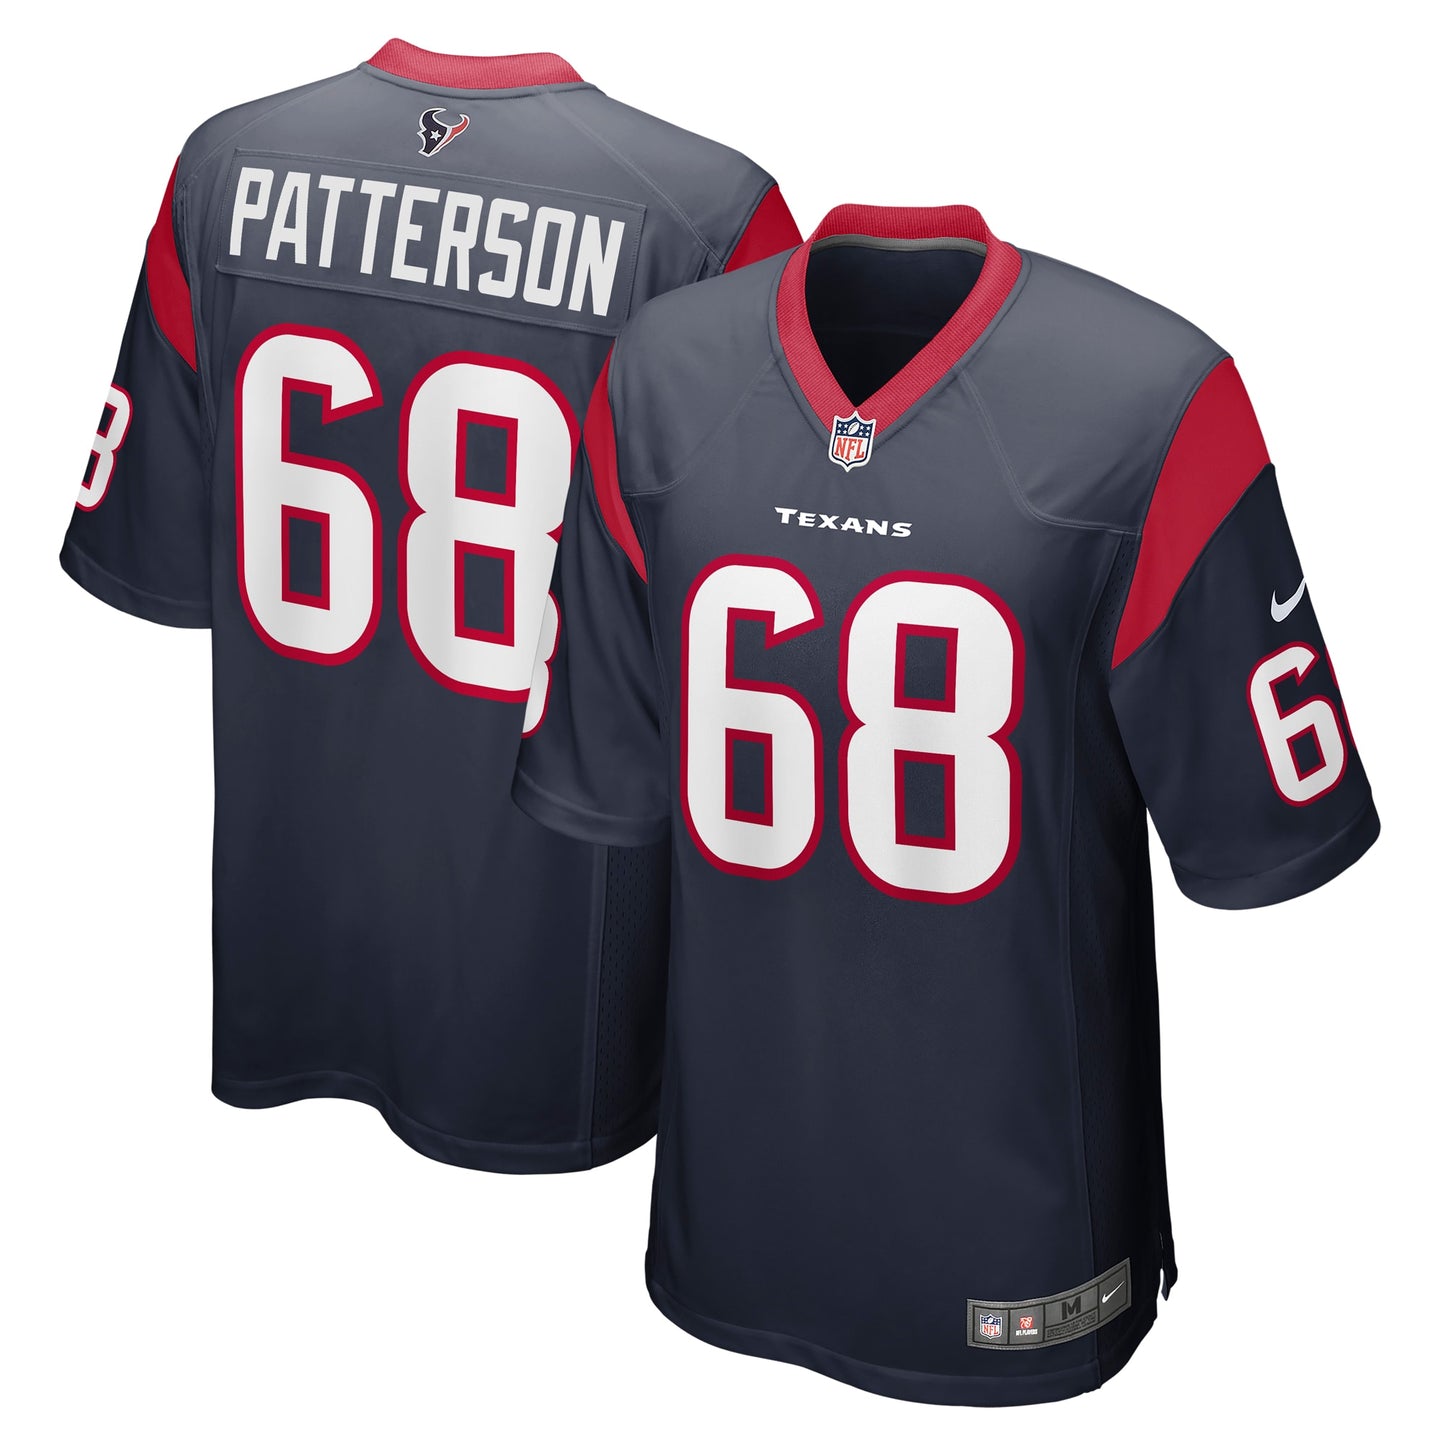 Jarrett Patterson Houston Texans Nike Team Game Jersey - Navy